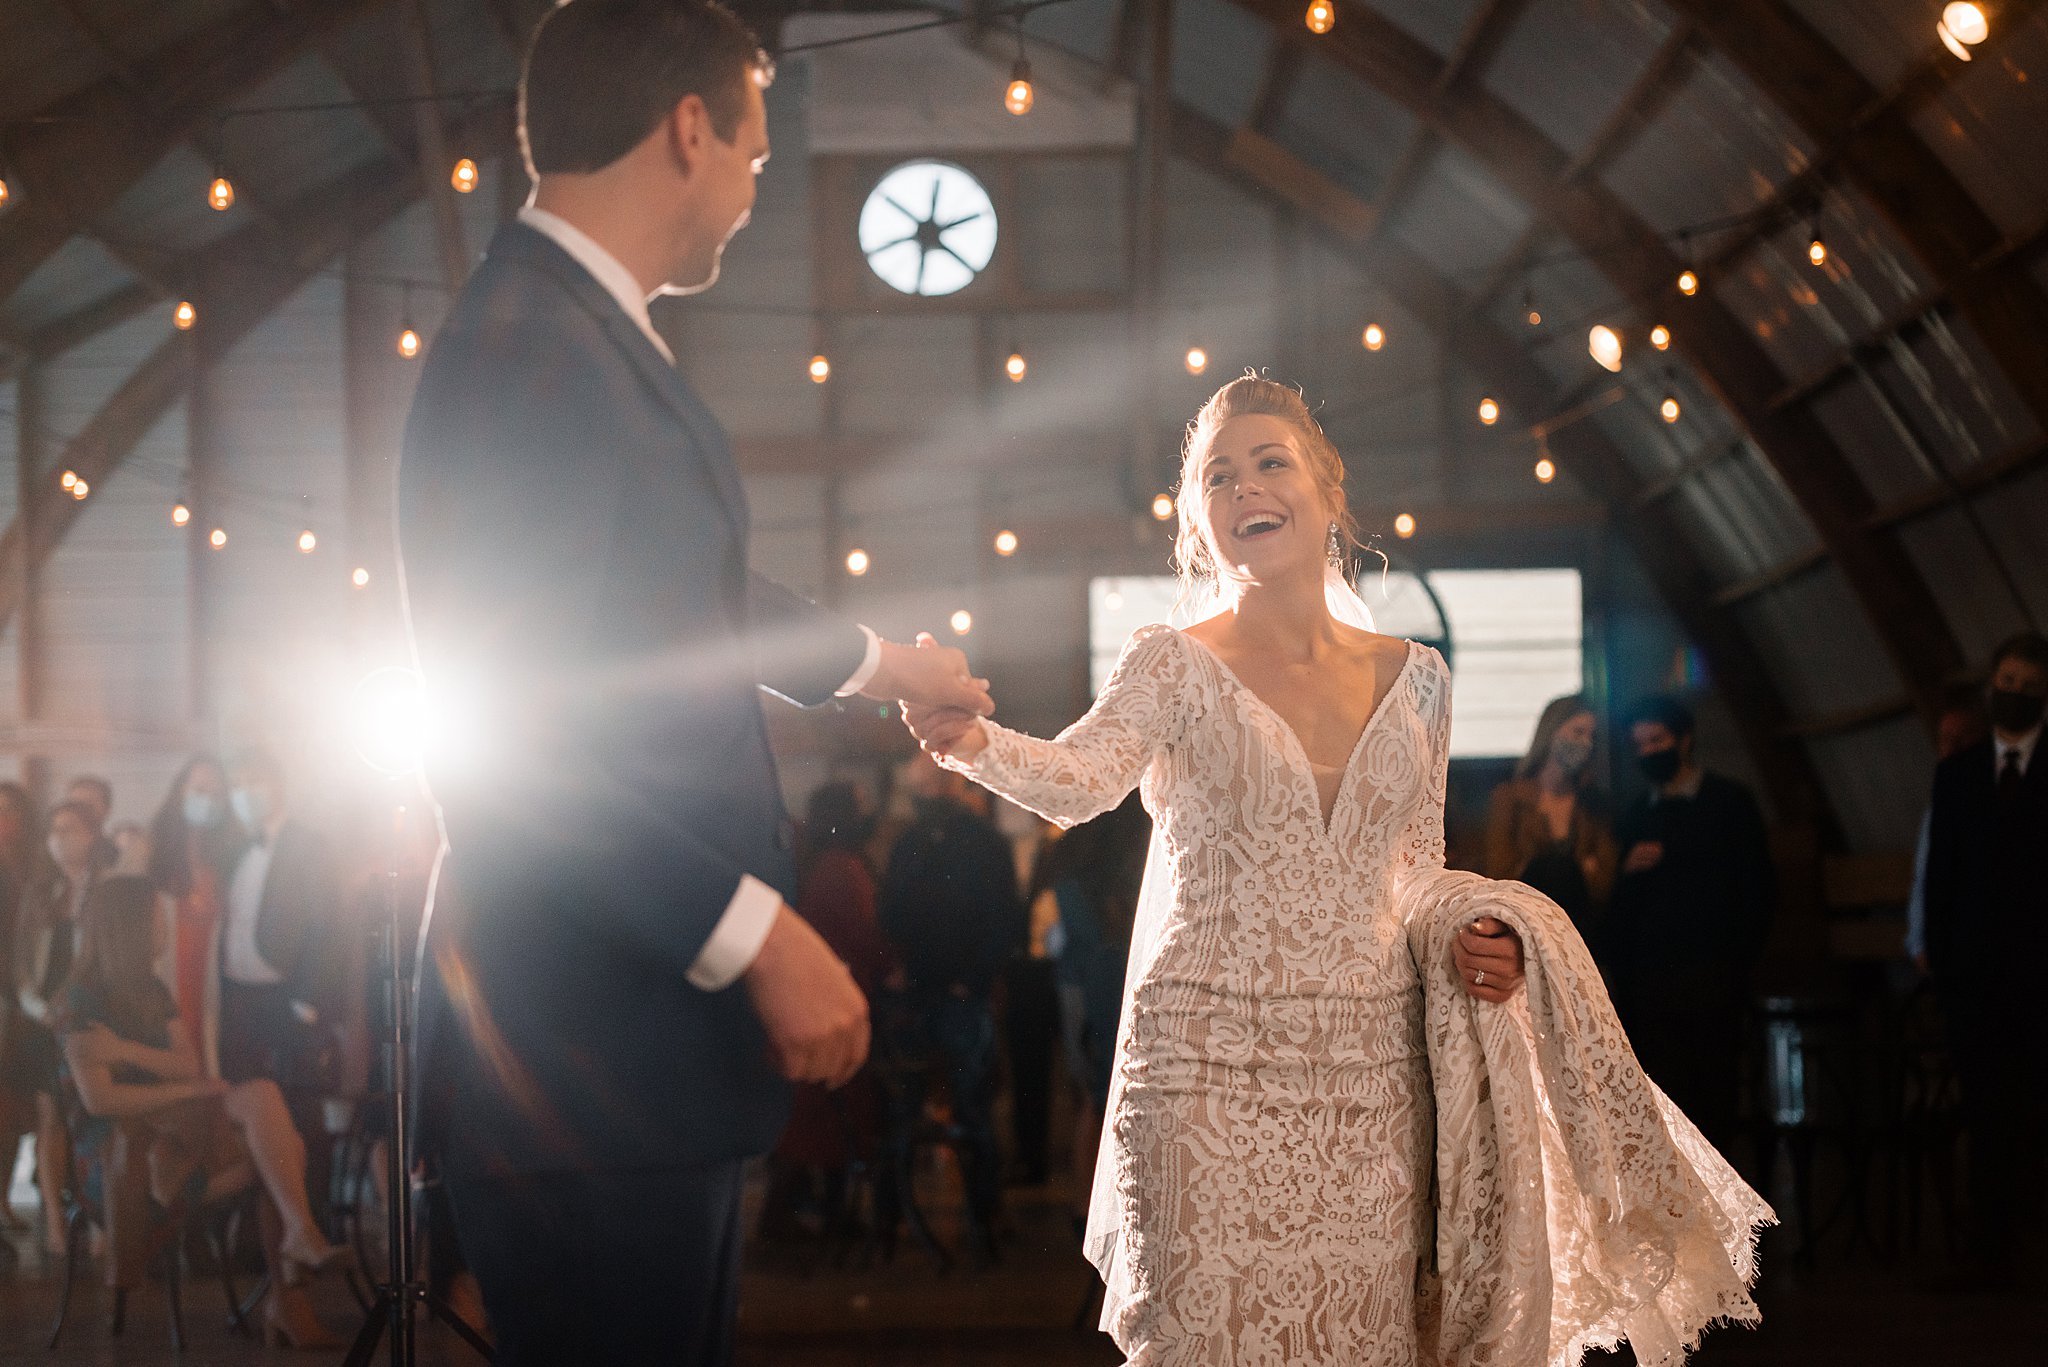 dance at Minnesota barn wedding venue